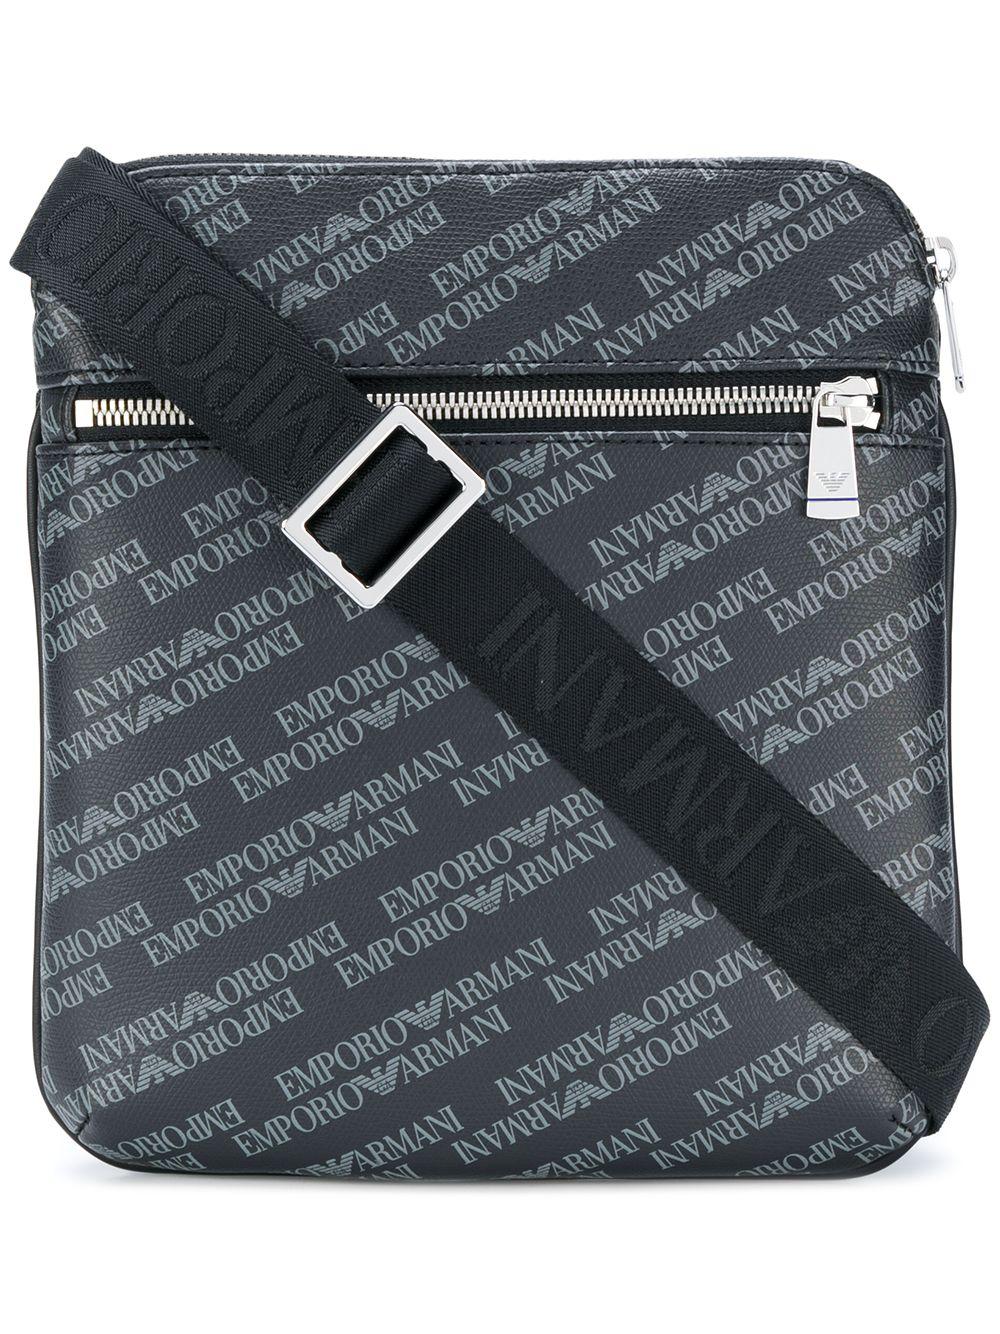 Emporio Armani Synthetic Branded Shoulder Bag in Black for Men - Lyst